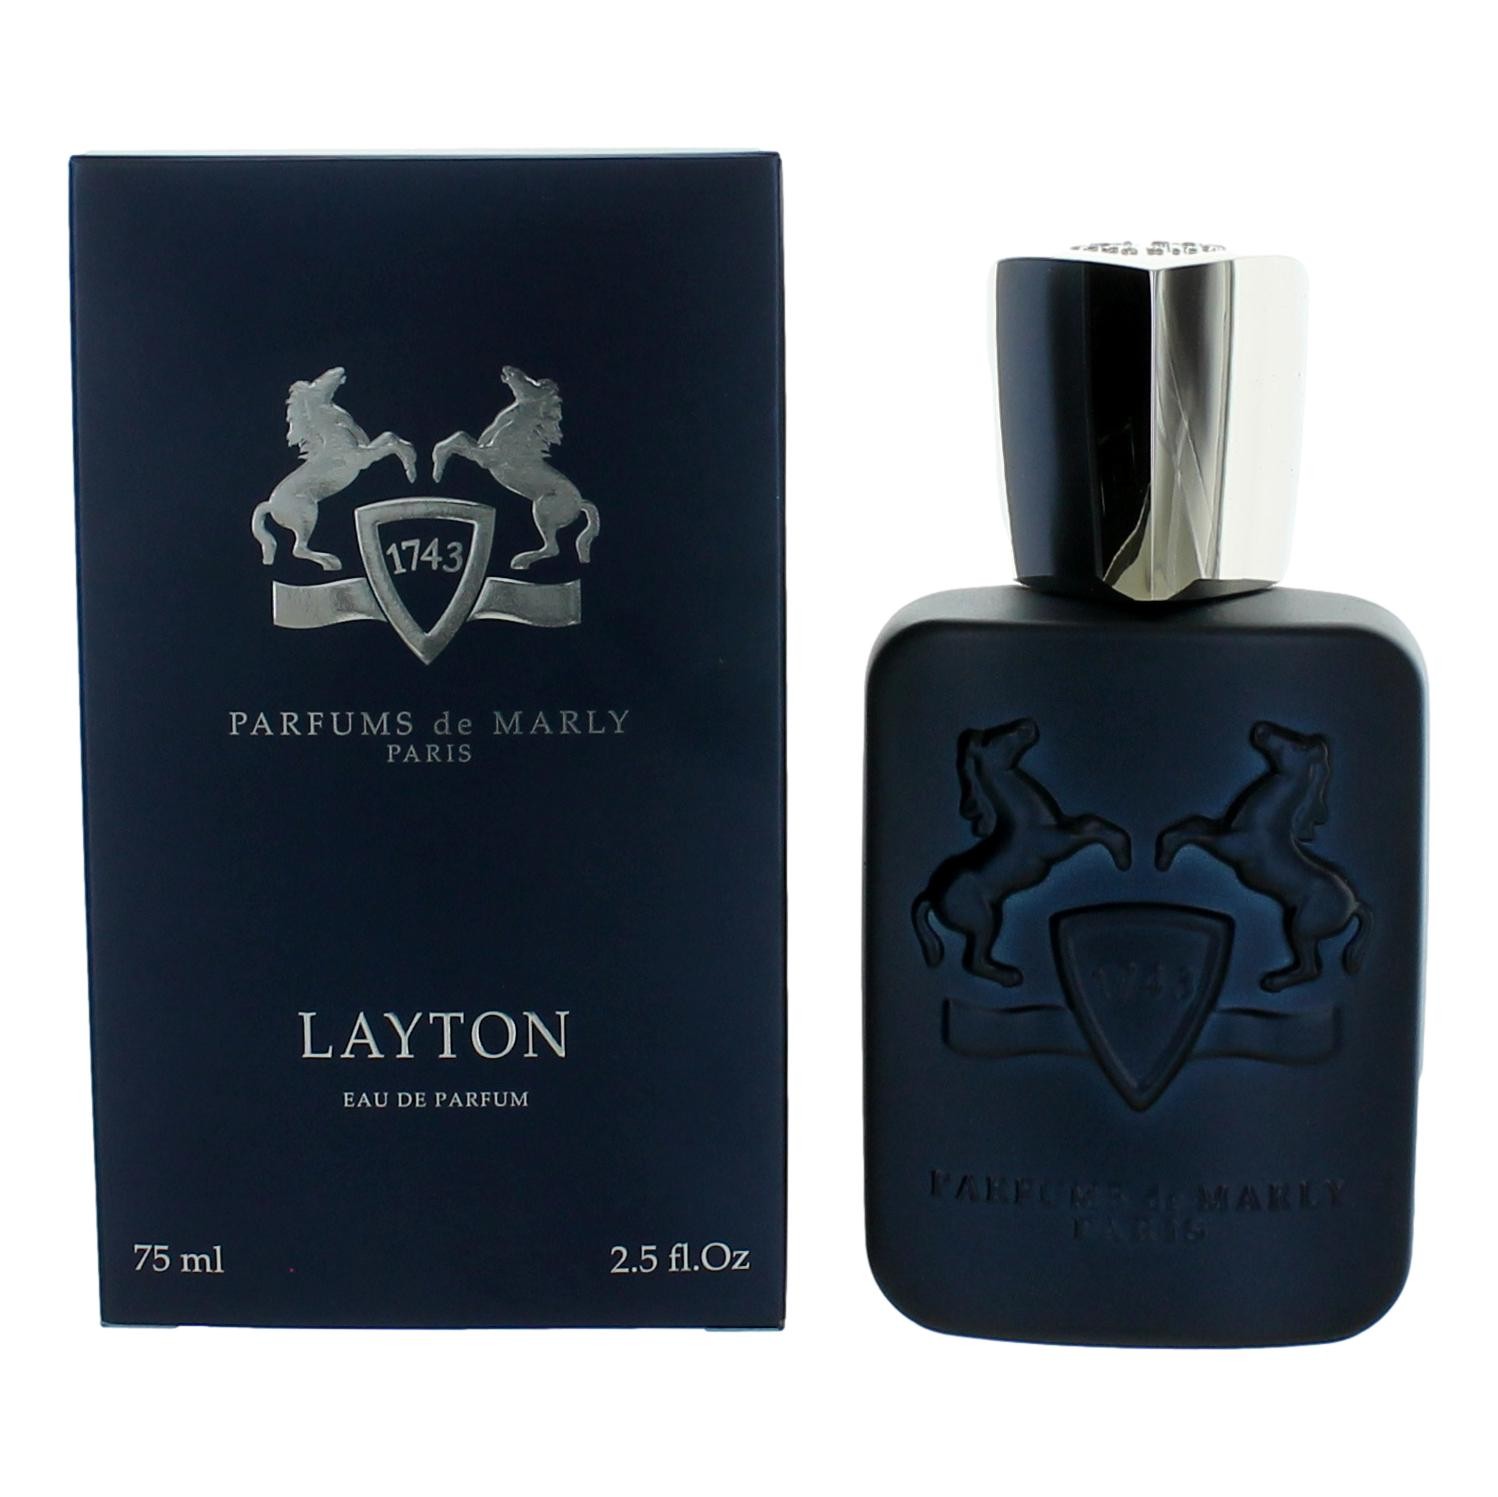 Parfums de Marly Layton by Parfums de Marly 2.5 oz Eau De Parfum Spray for Men